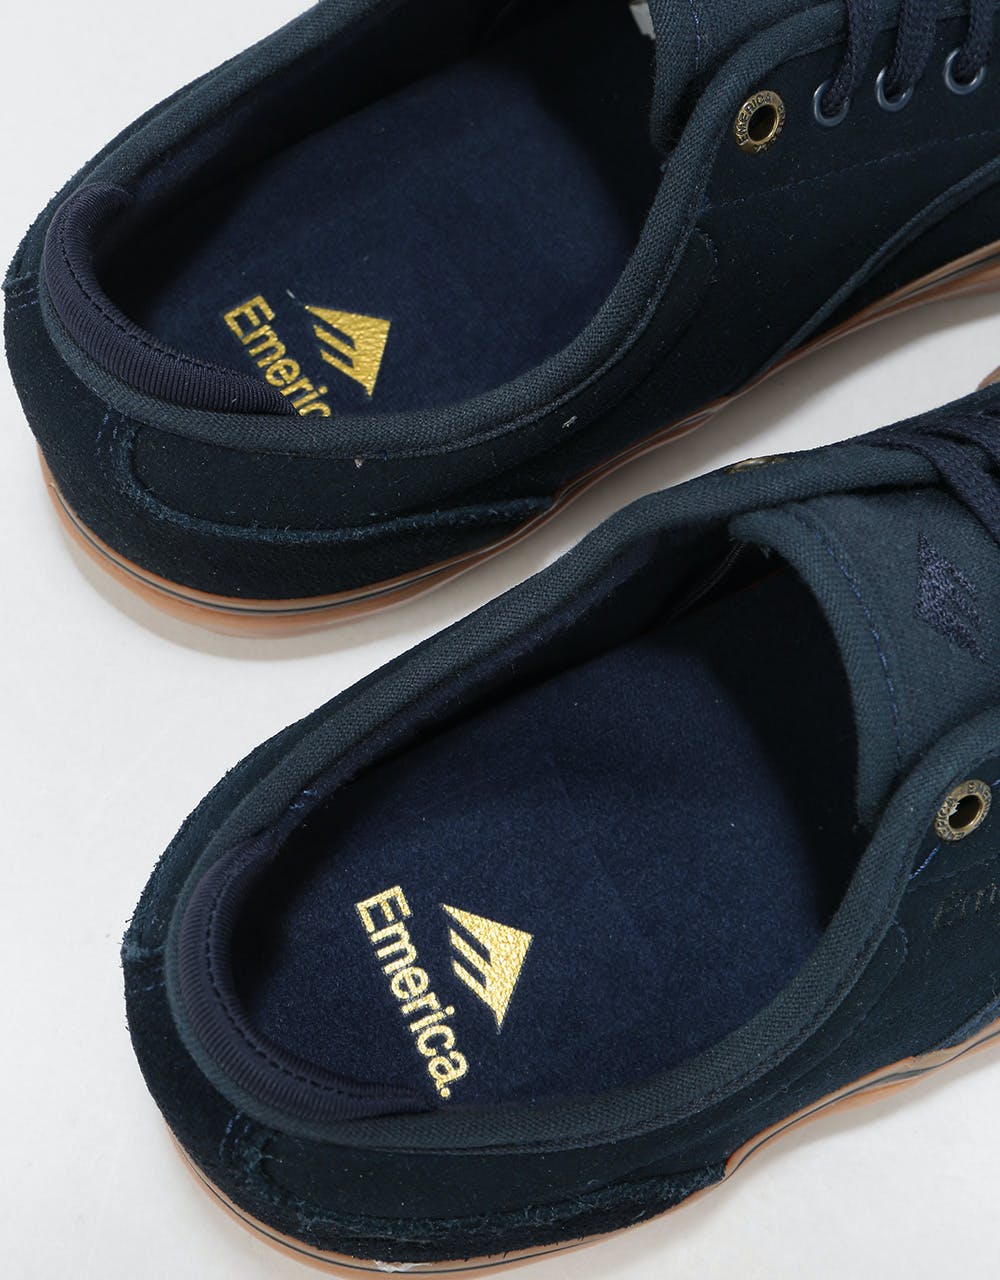 Emerica Wino G6 Skate Shoes - Navy/Gum